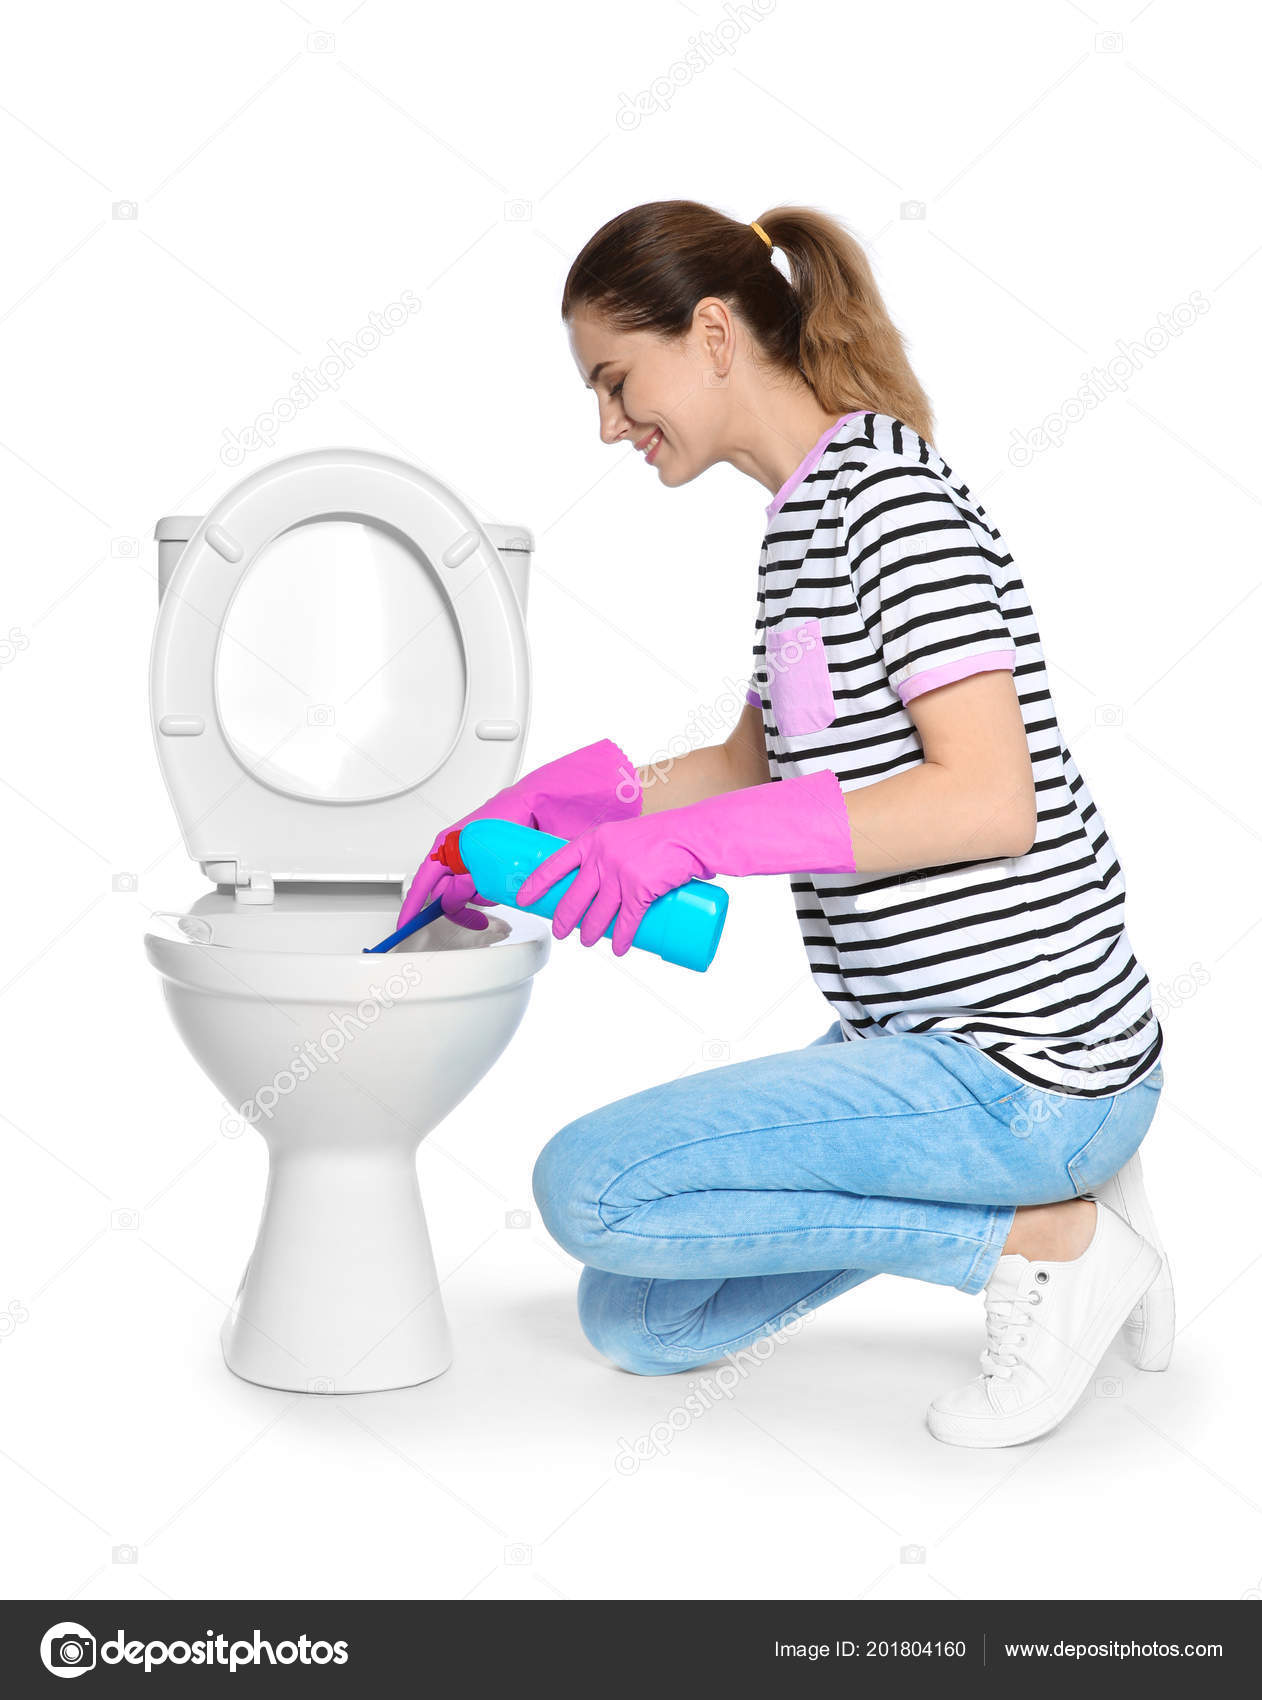 File:Woman cleaning toilets.jpg - Wikipedia